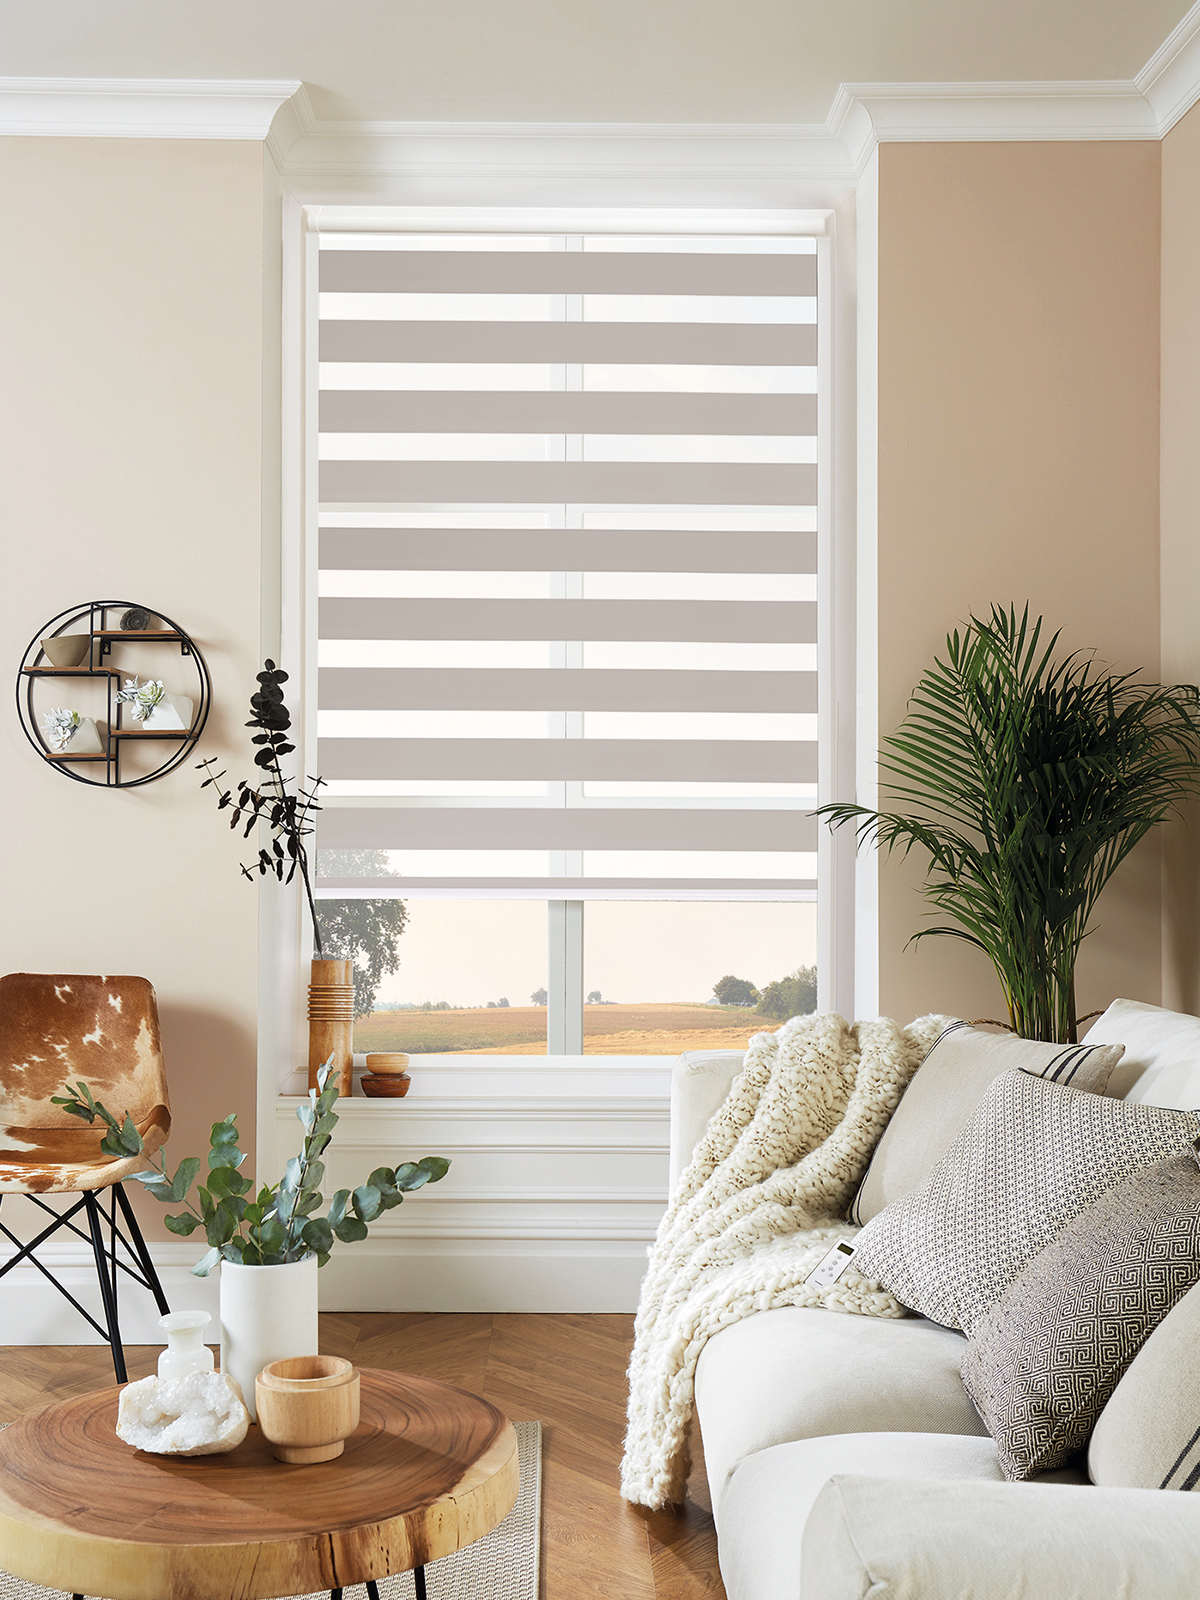 Vision blinds in living room